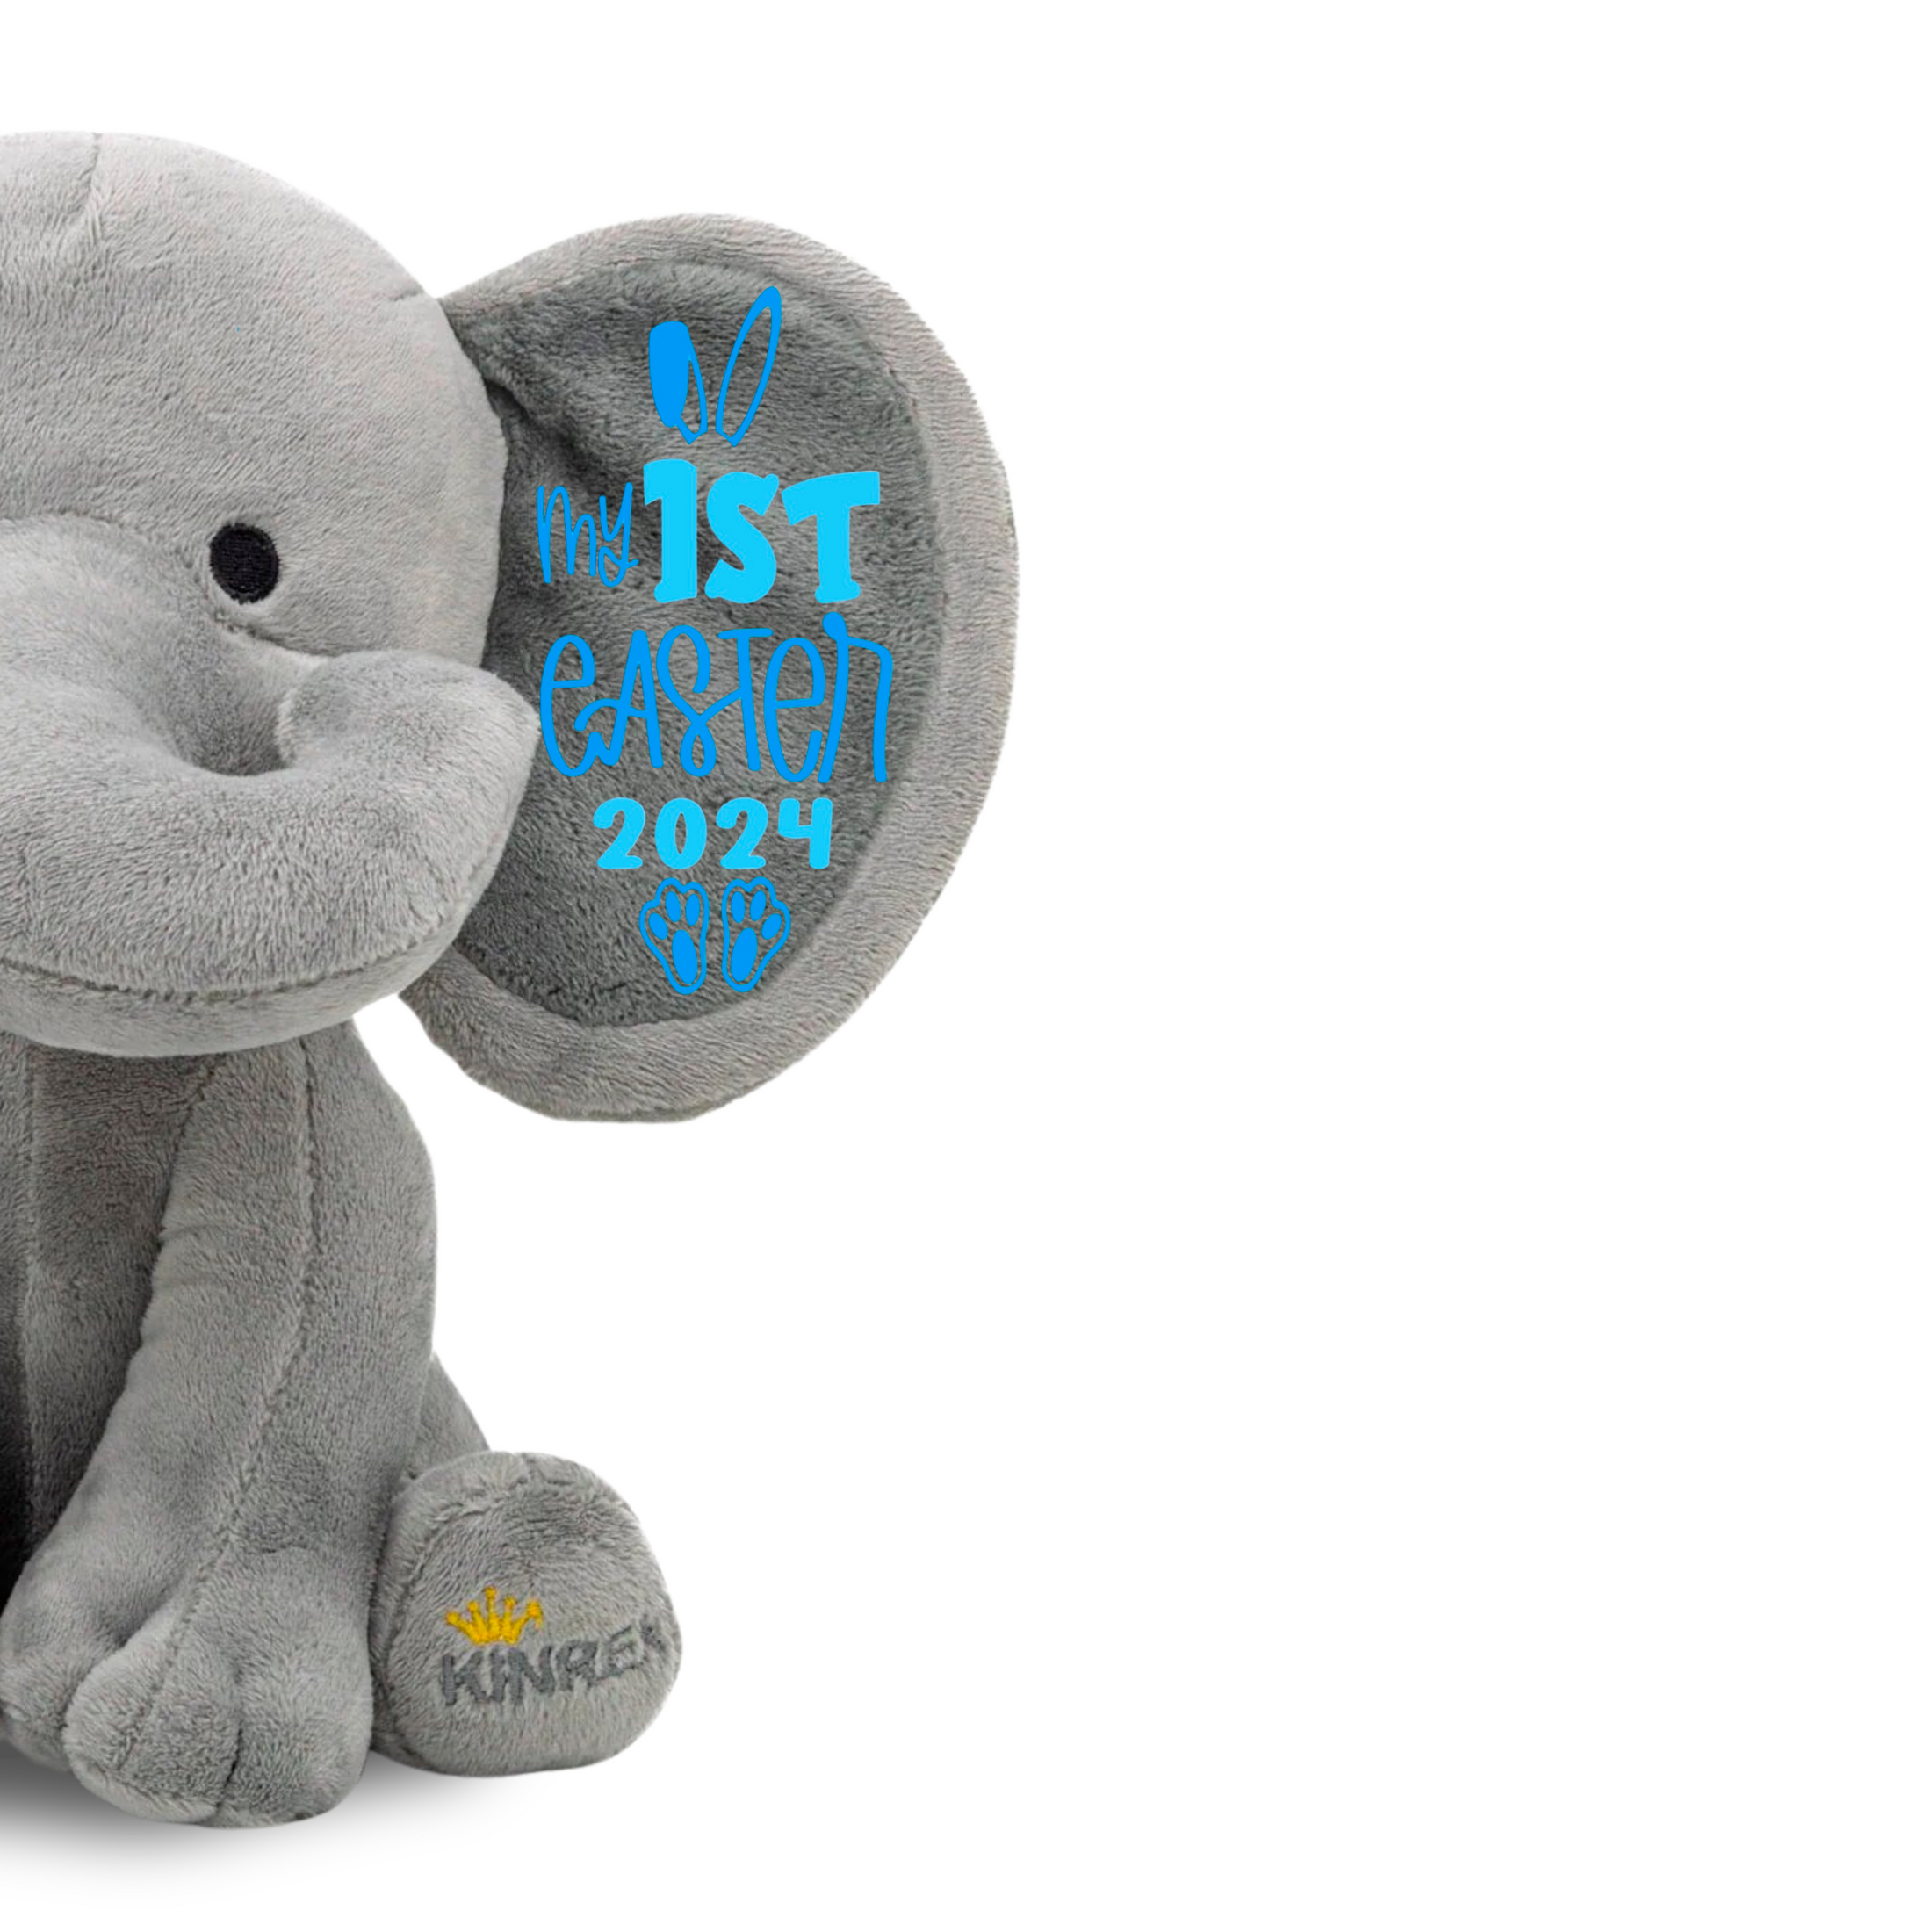 Personalized Elephant Stuffed Animal - My First Easter Elephant